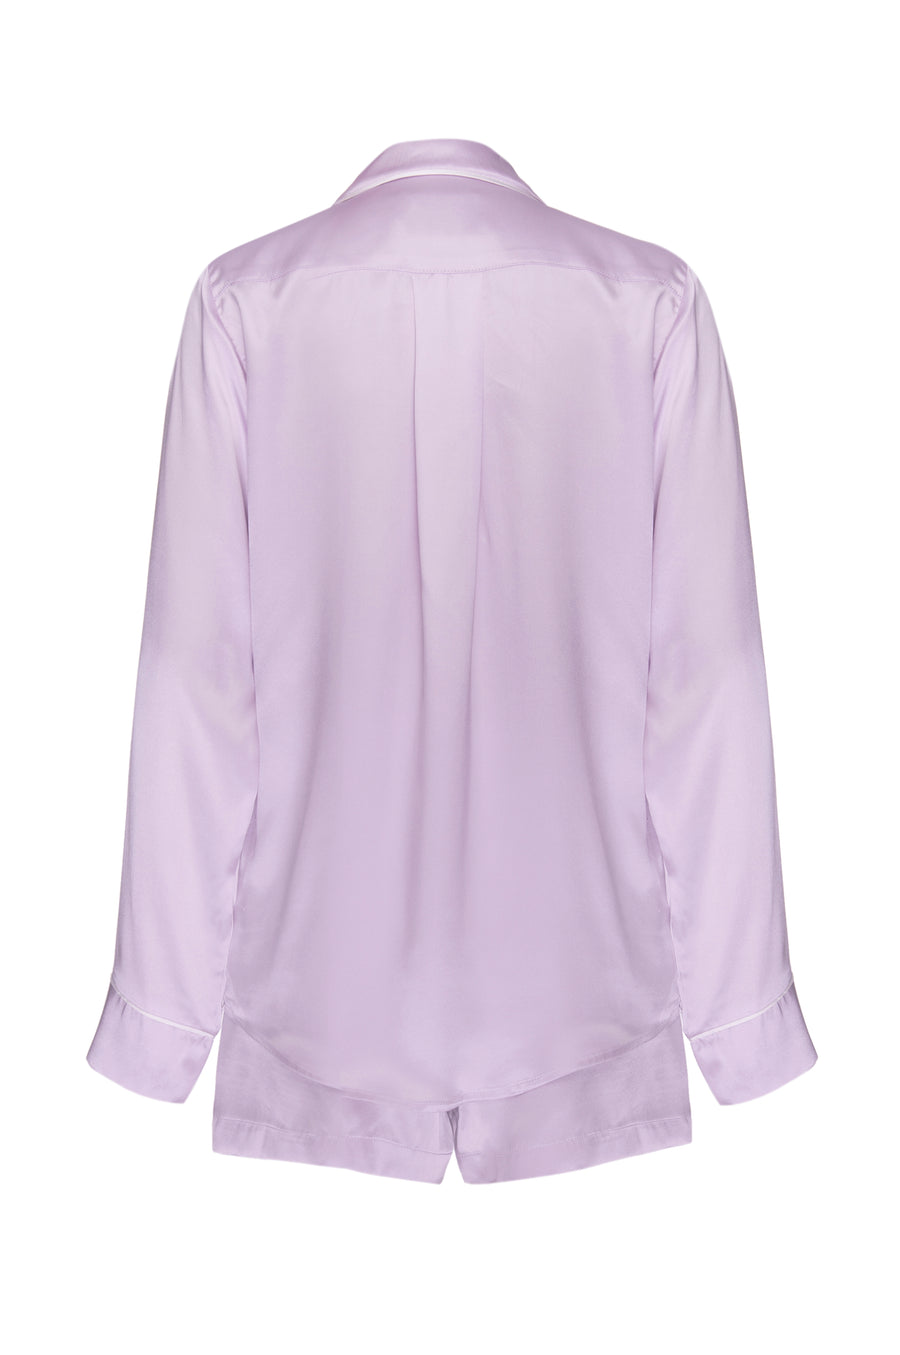 Silk Charmeuse Long Sleeved PJ Top: Lilac